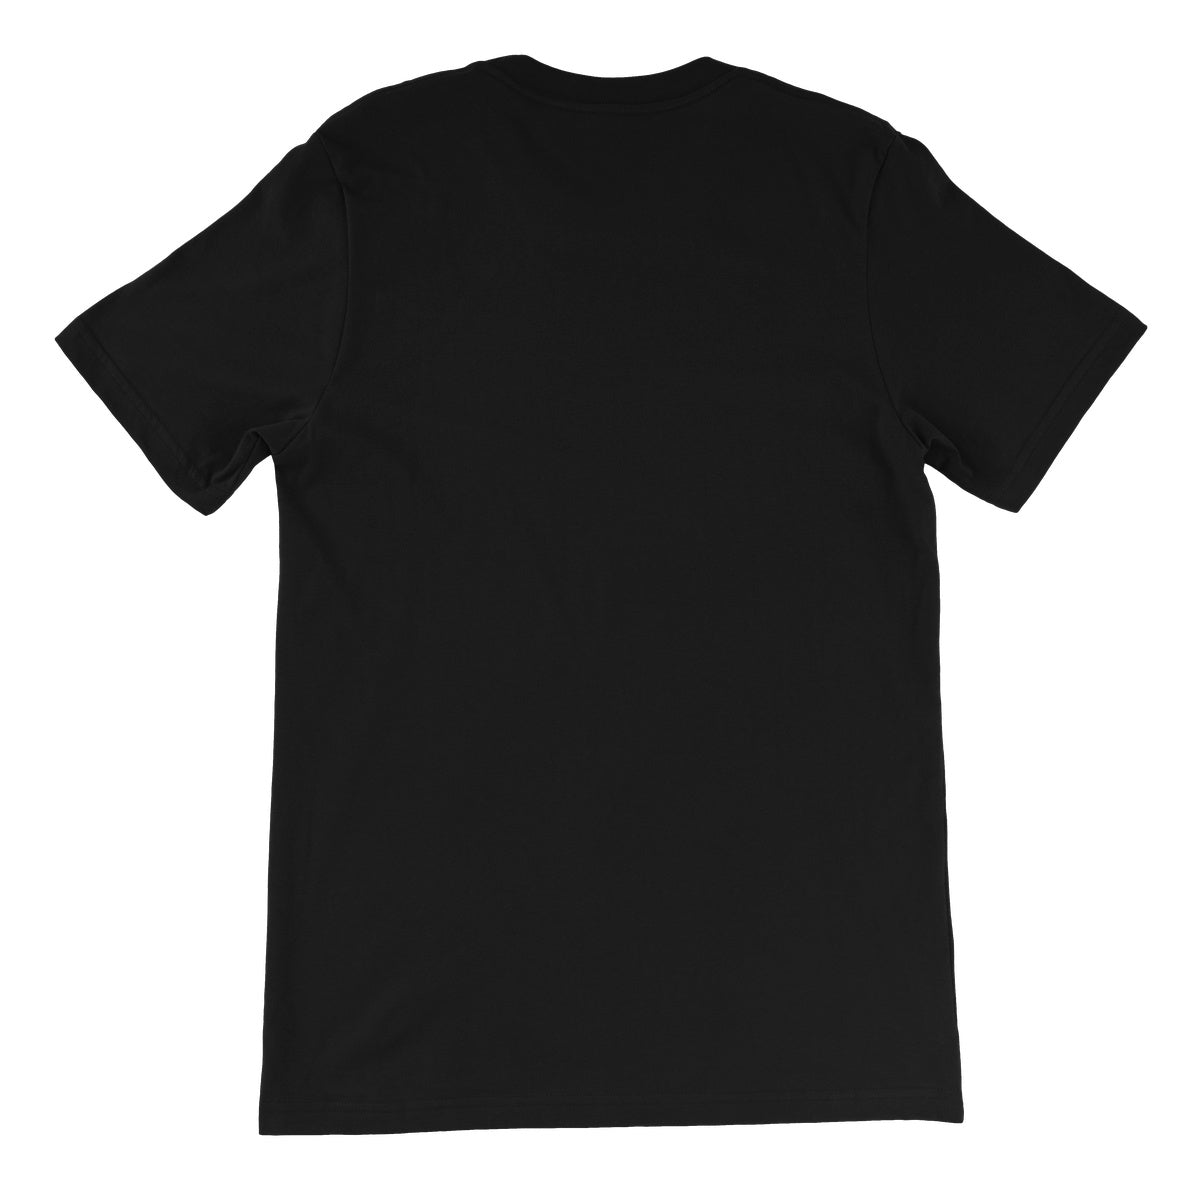 Beetlejuice Illustrated Unisex Short Sleeve T-Shirt